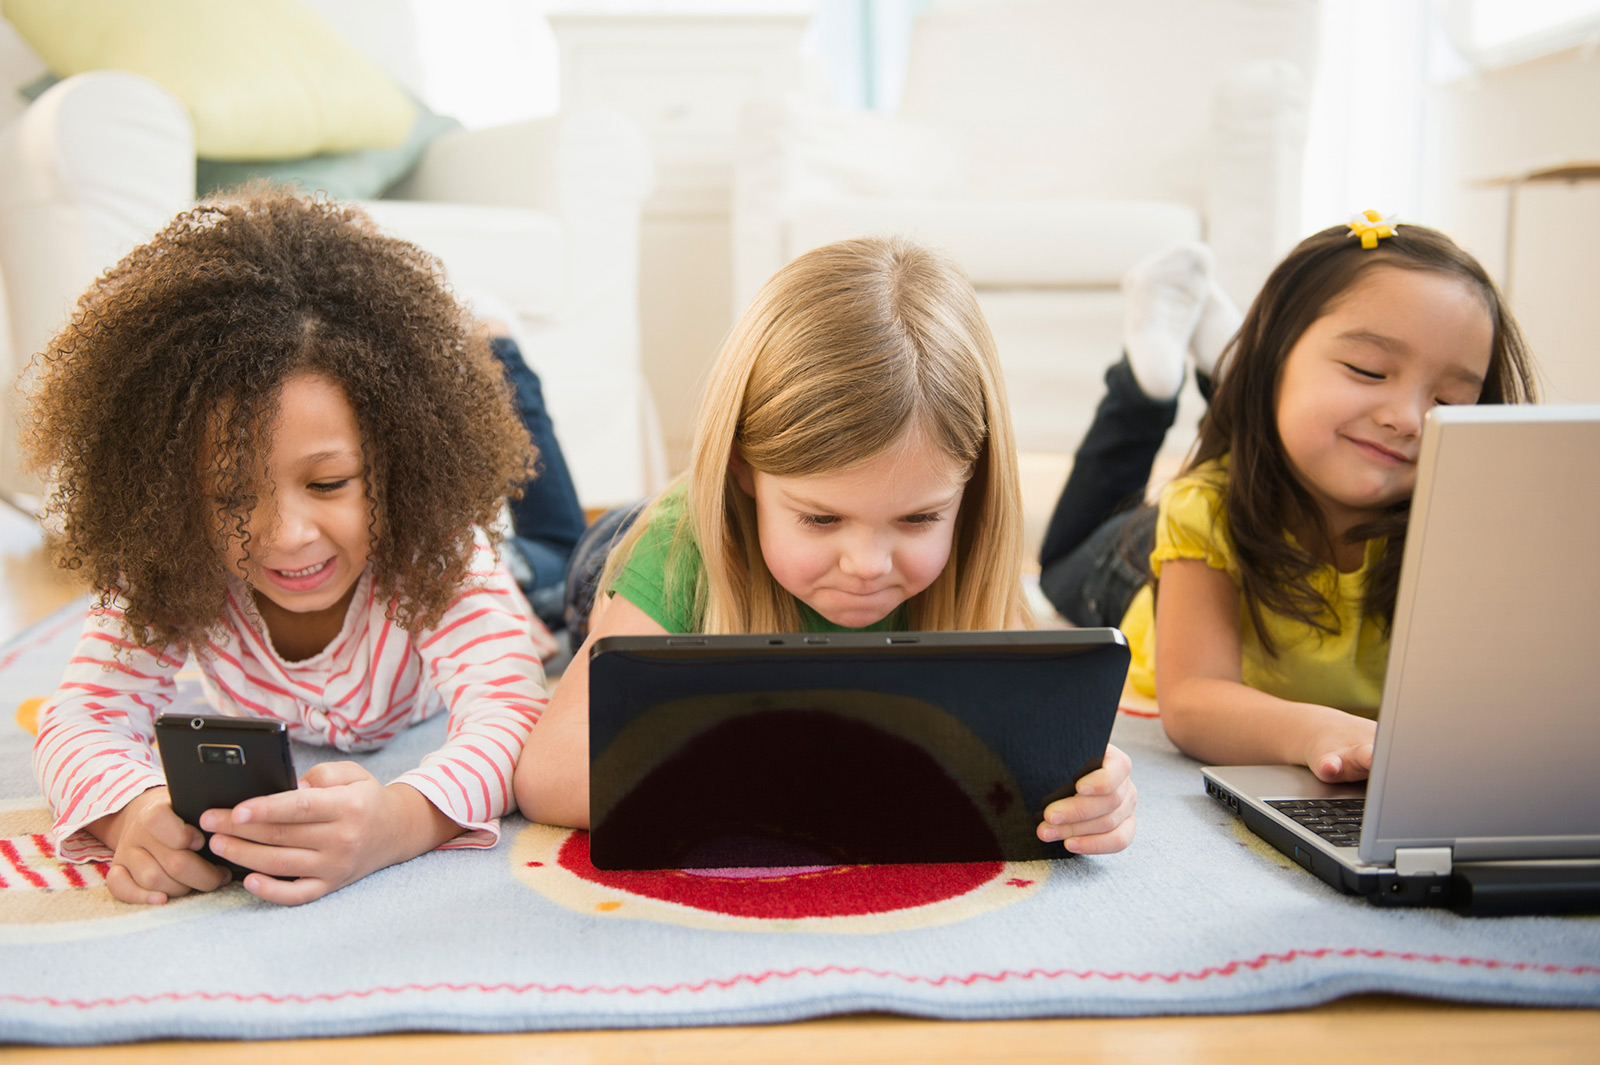 Kids Safety on the Internet | LoveToKnow